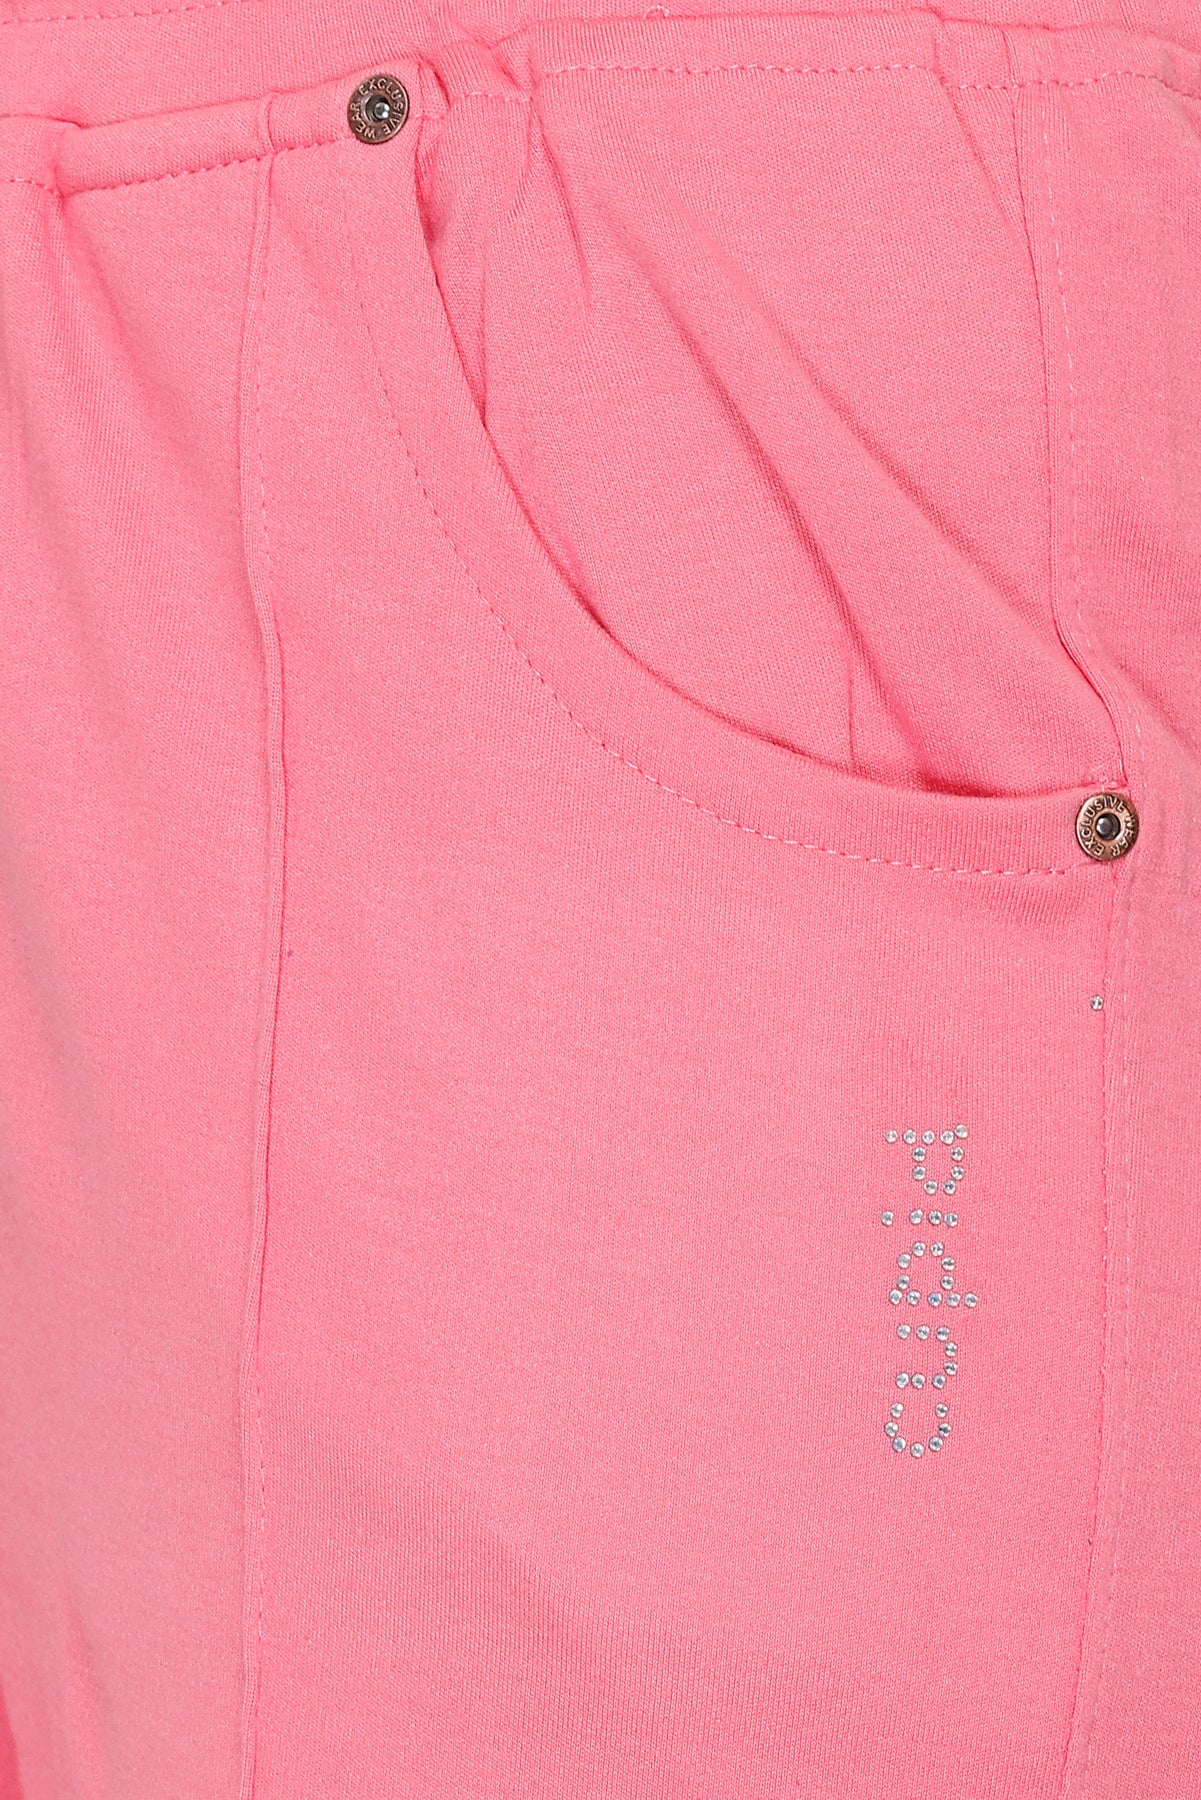 Women Pink Jeans - Buy Women Pink Jeans online in India